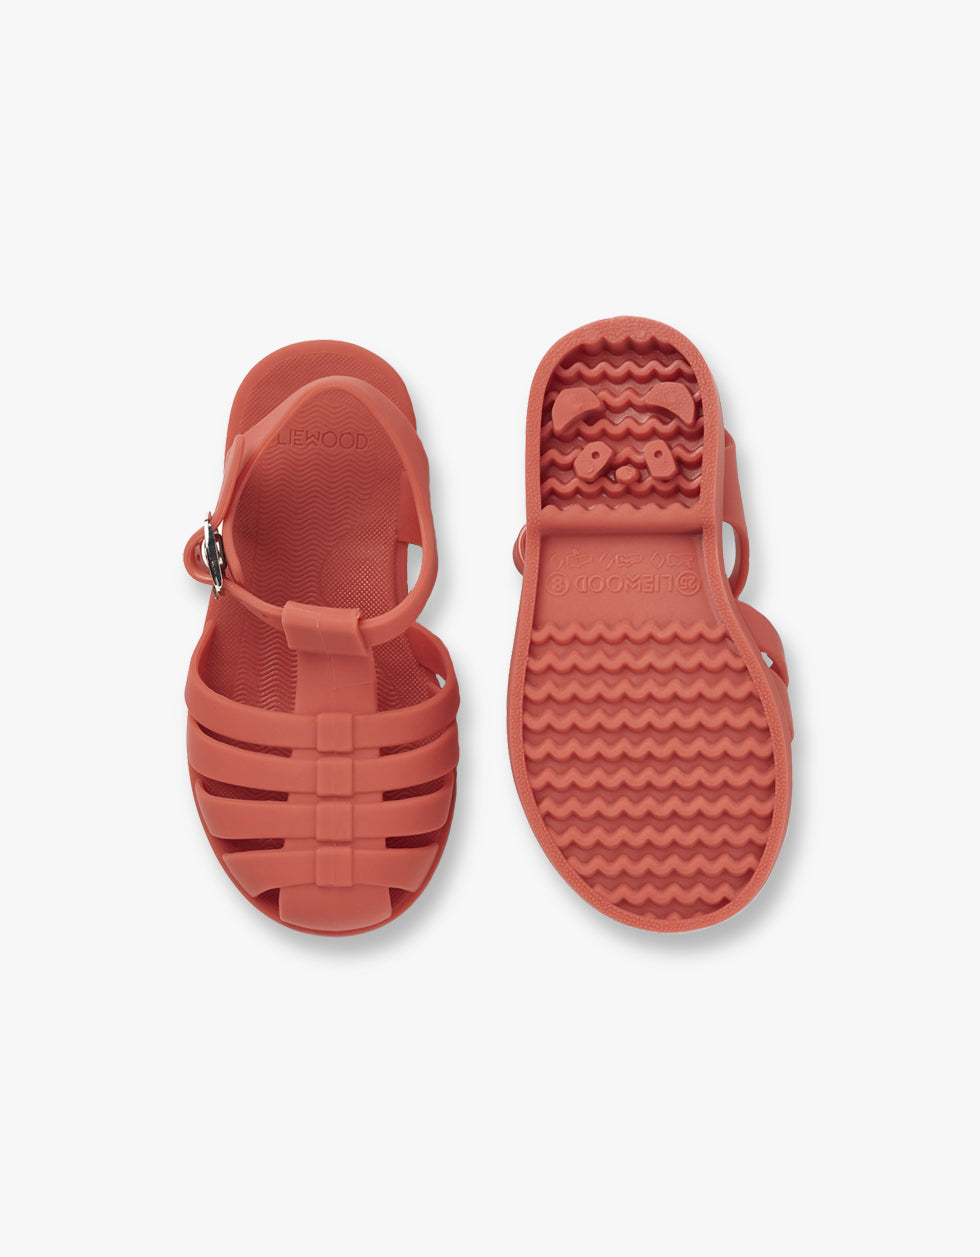 Bre Beach Sandals - Apple Red